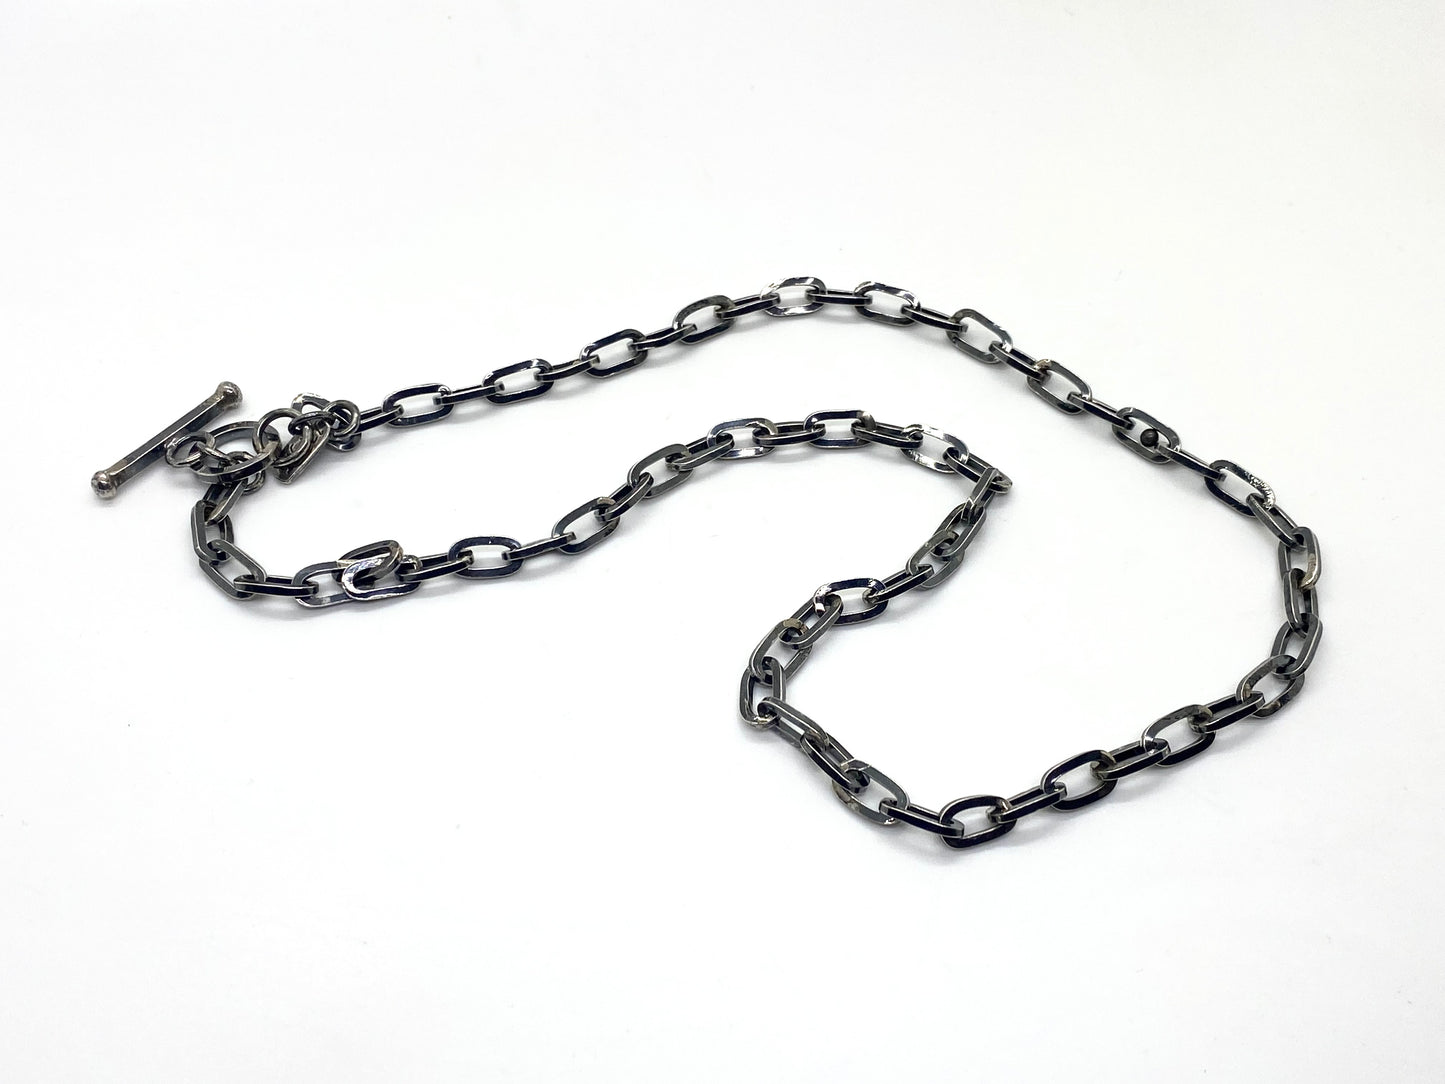 Handmade Chain, small, smooth links